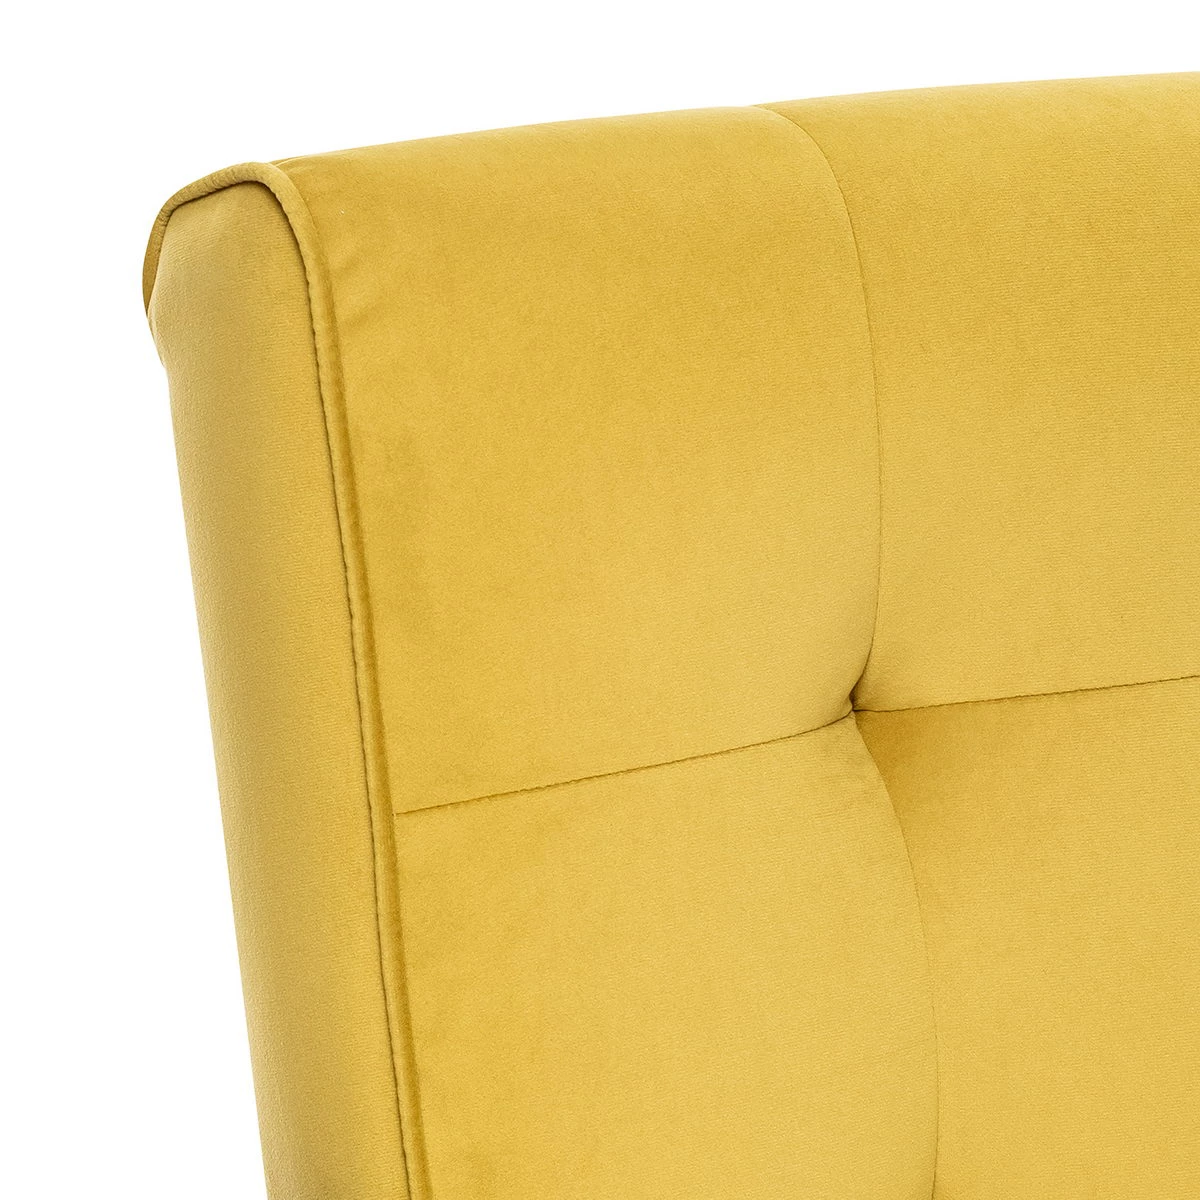 Кресло Leset Модена (Импэкс). Цвет каркаса: Орех текстура; Цвет обивки: V28 желтый